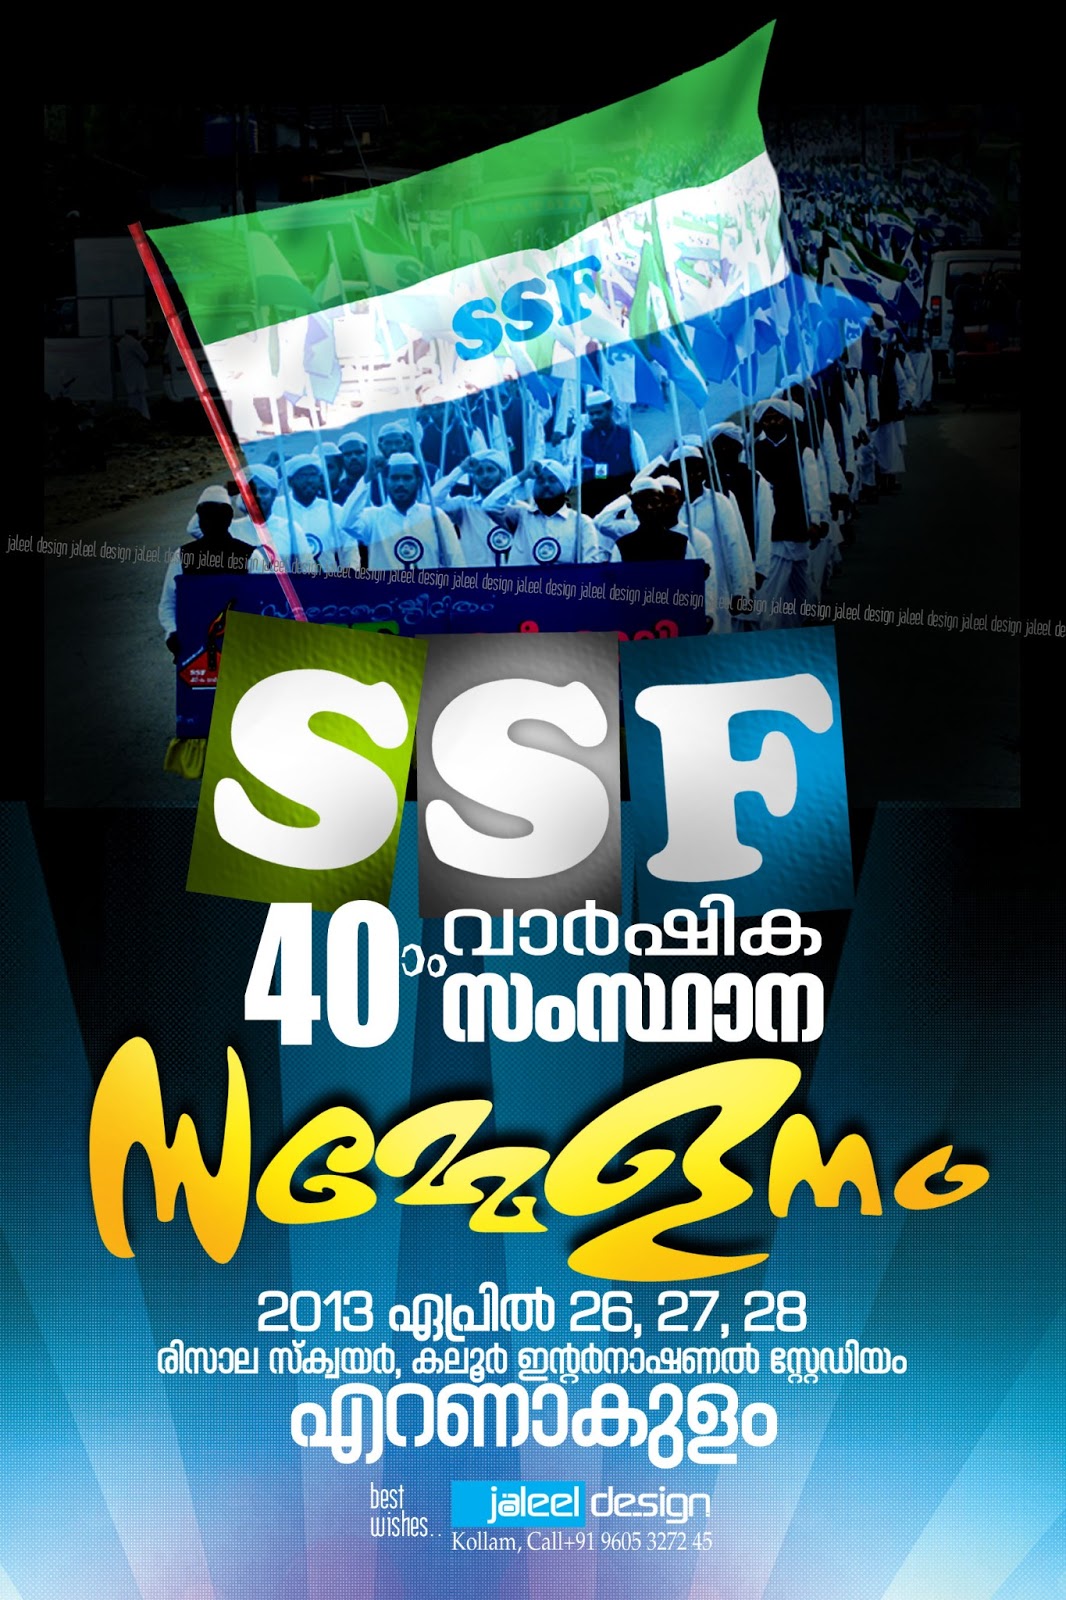 ssf 40th anniversary conference varshikam kaloor international stadium ...